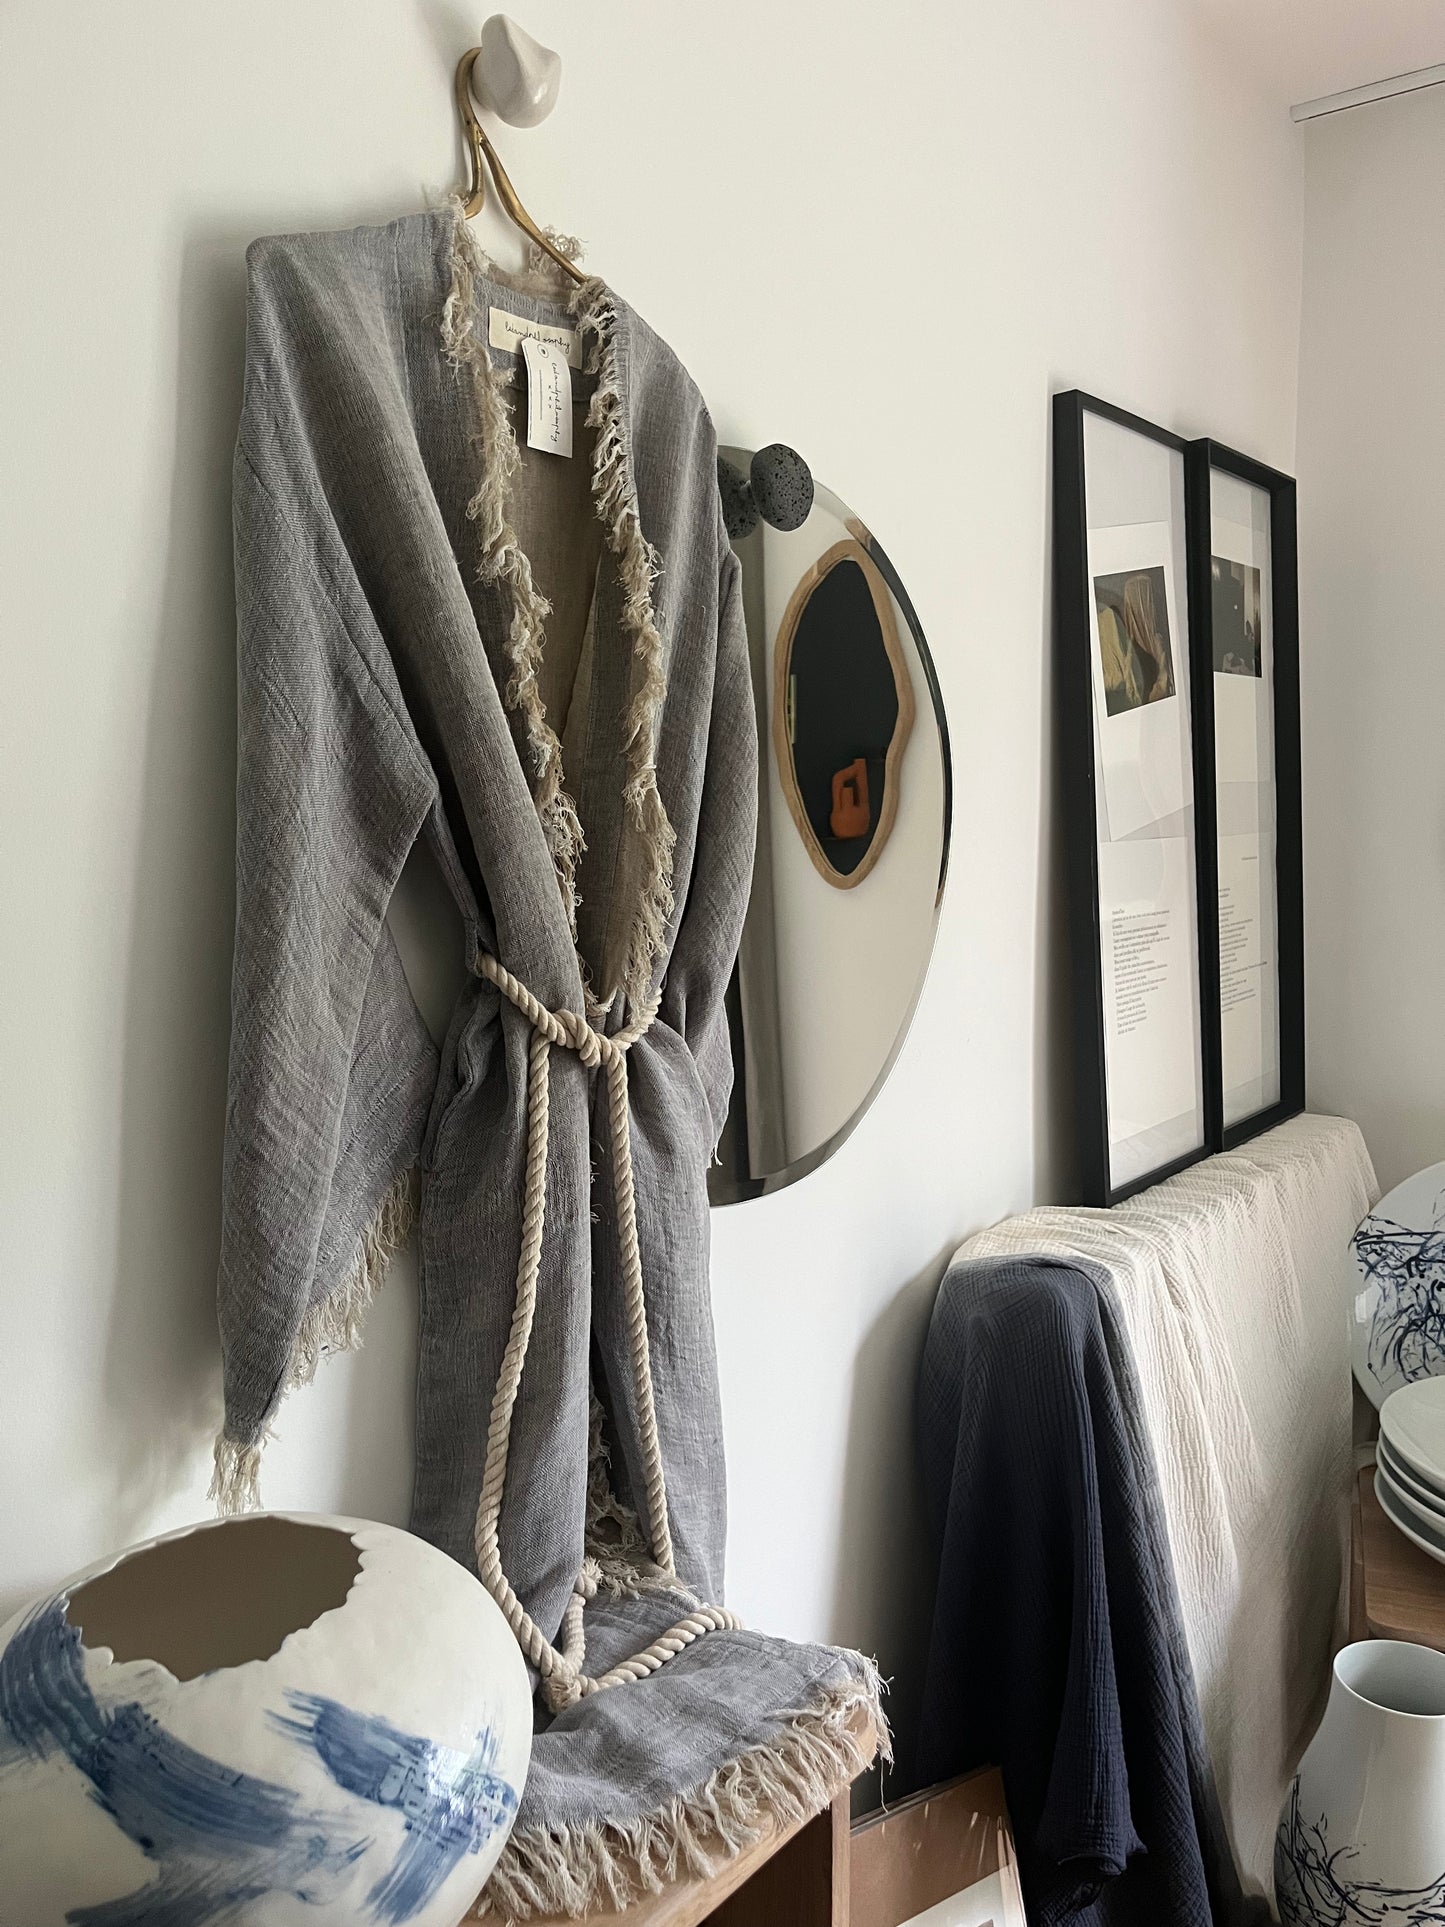 Kimono Garace Bed and Philosophy